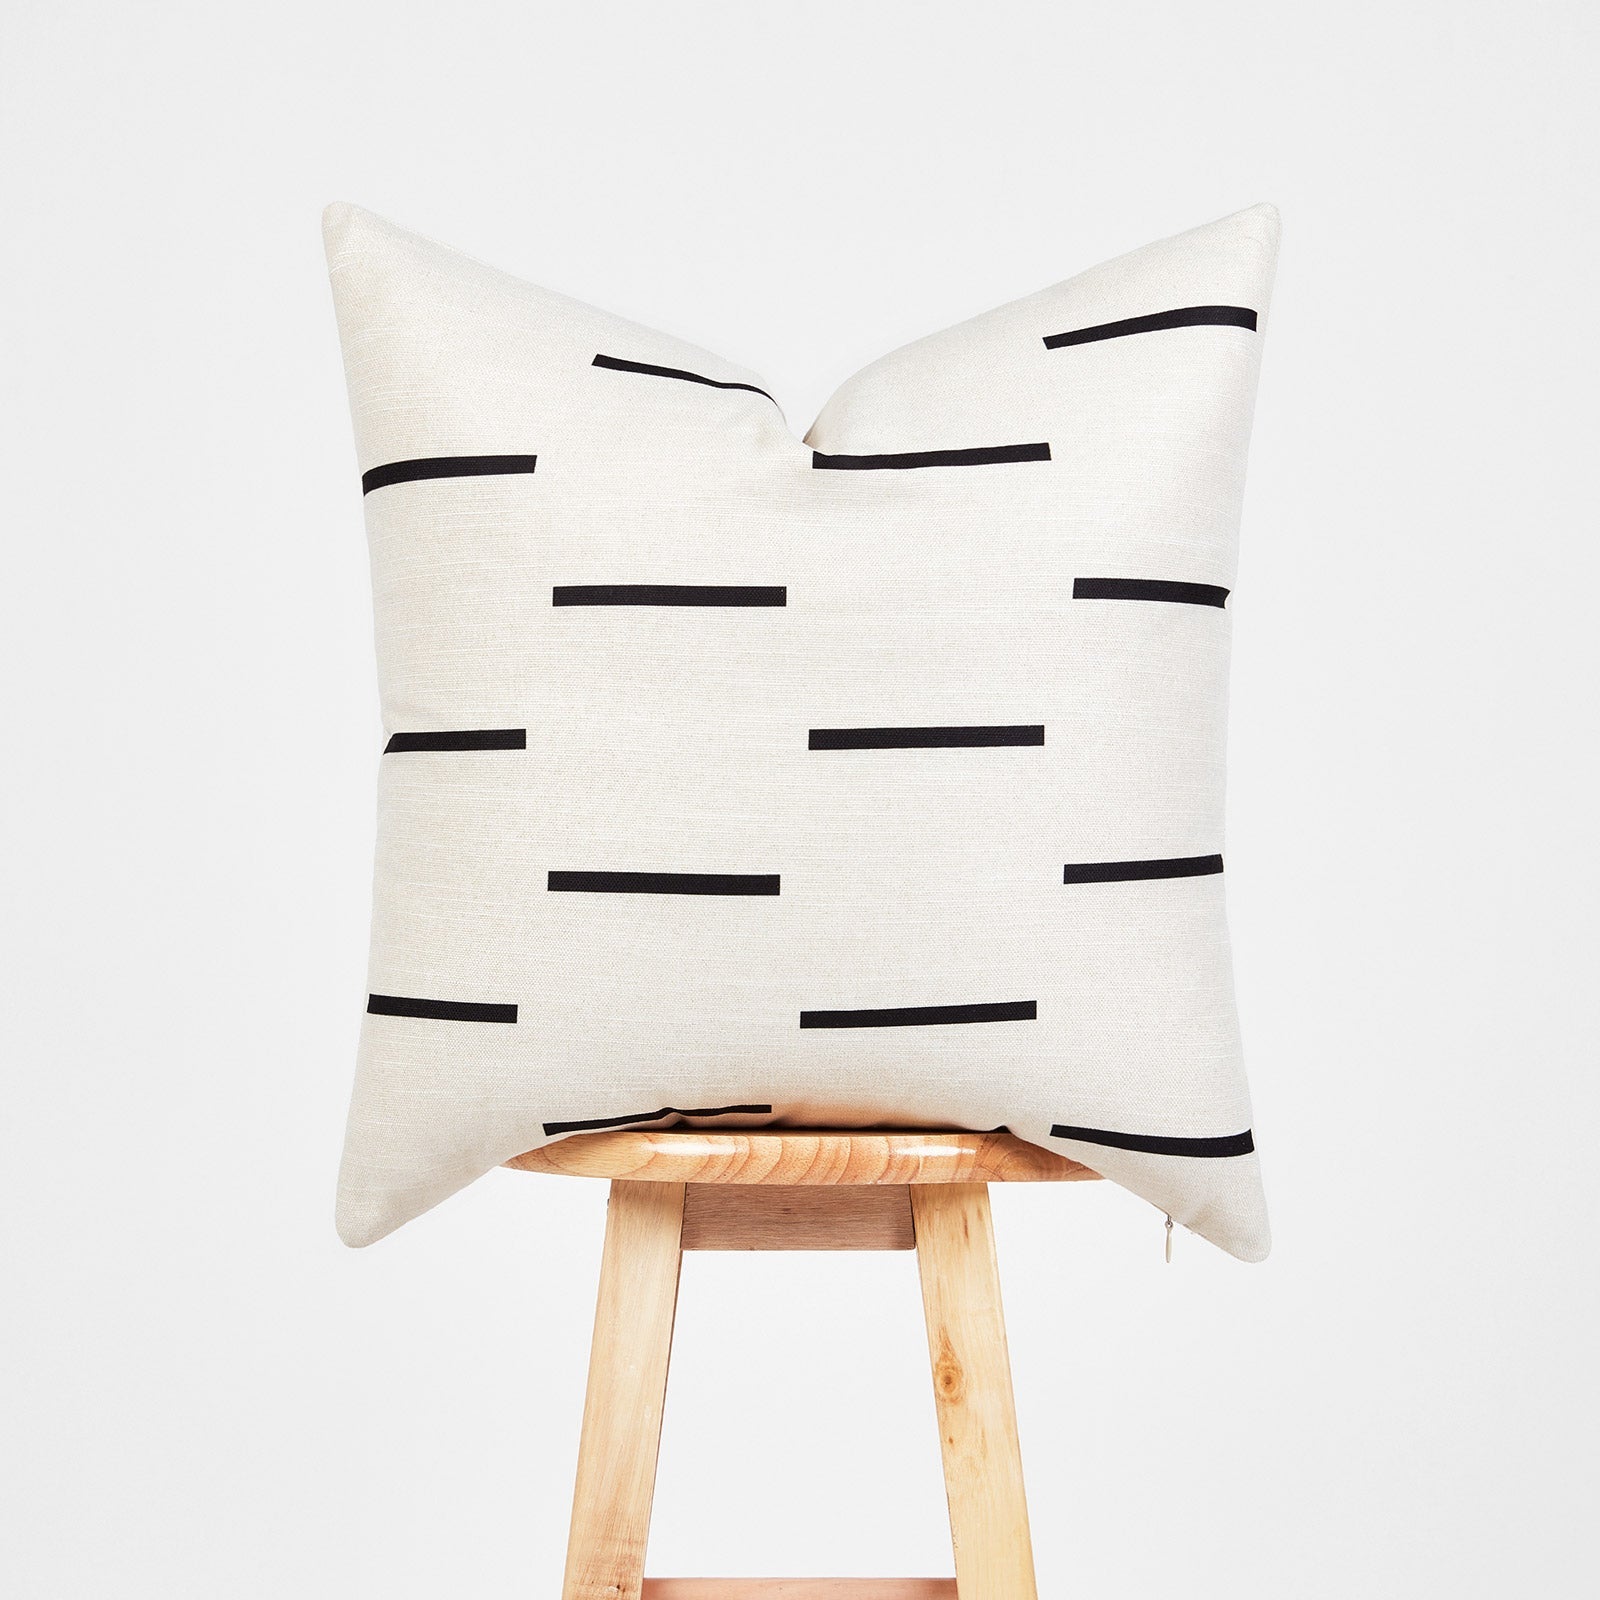 Aztec Print Pillow Cover, Stripes, Black White, 18"x18"